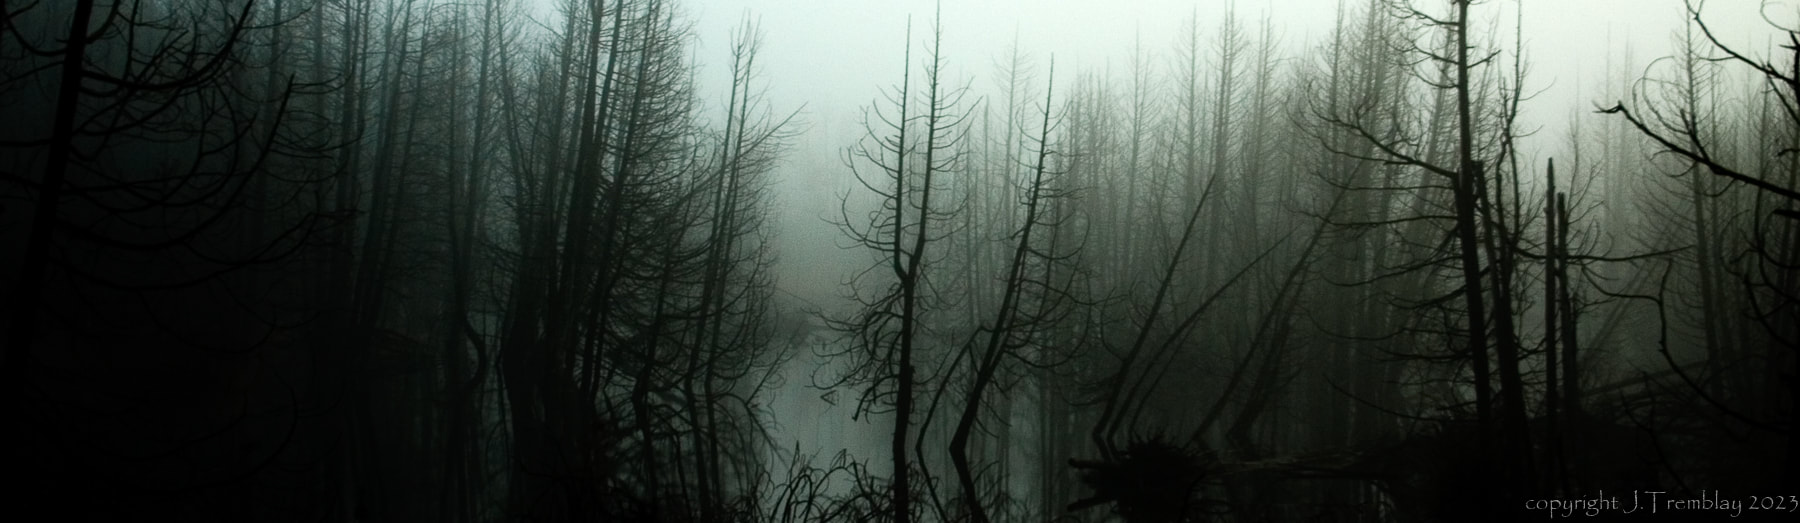 Swamp, Fog, landscape, Canon
